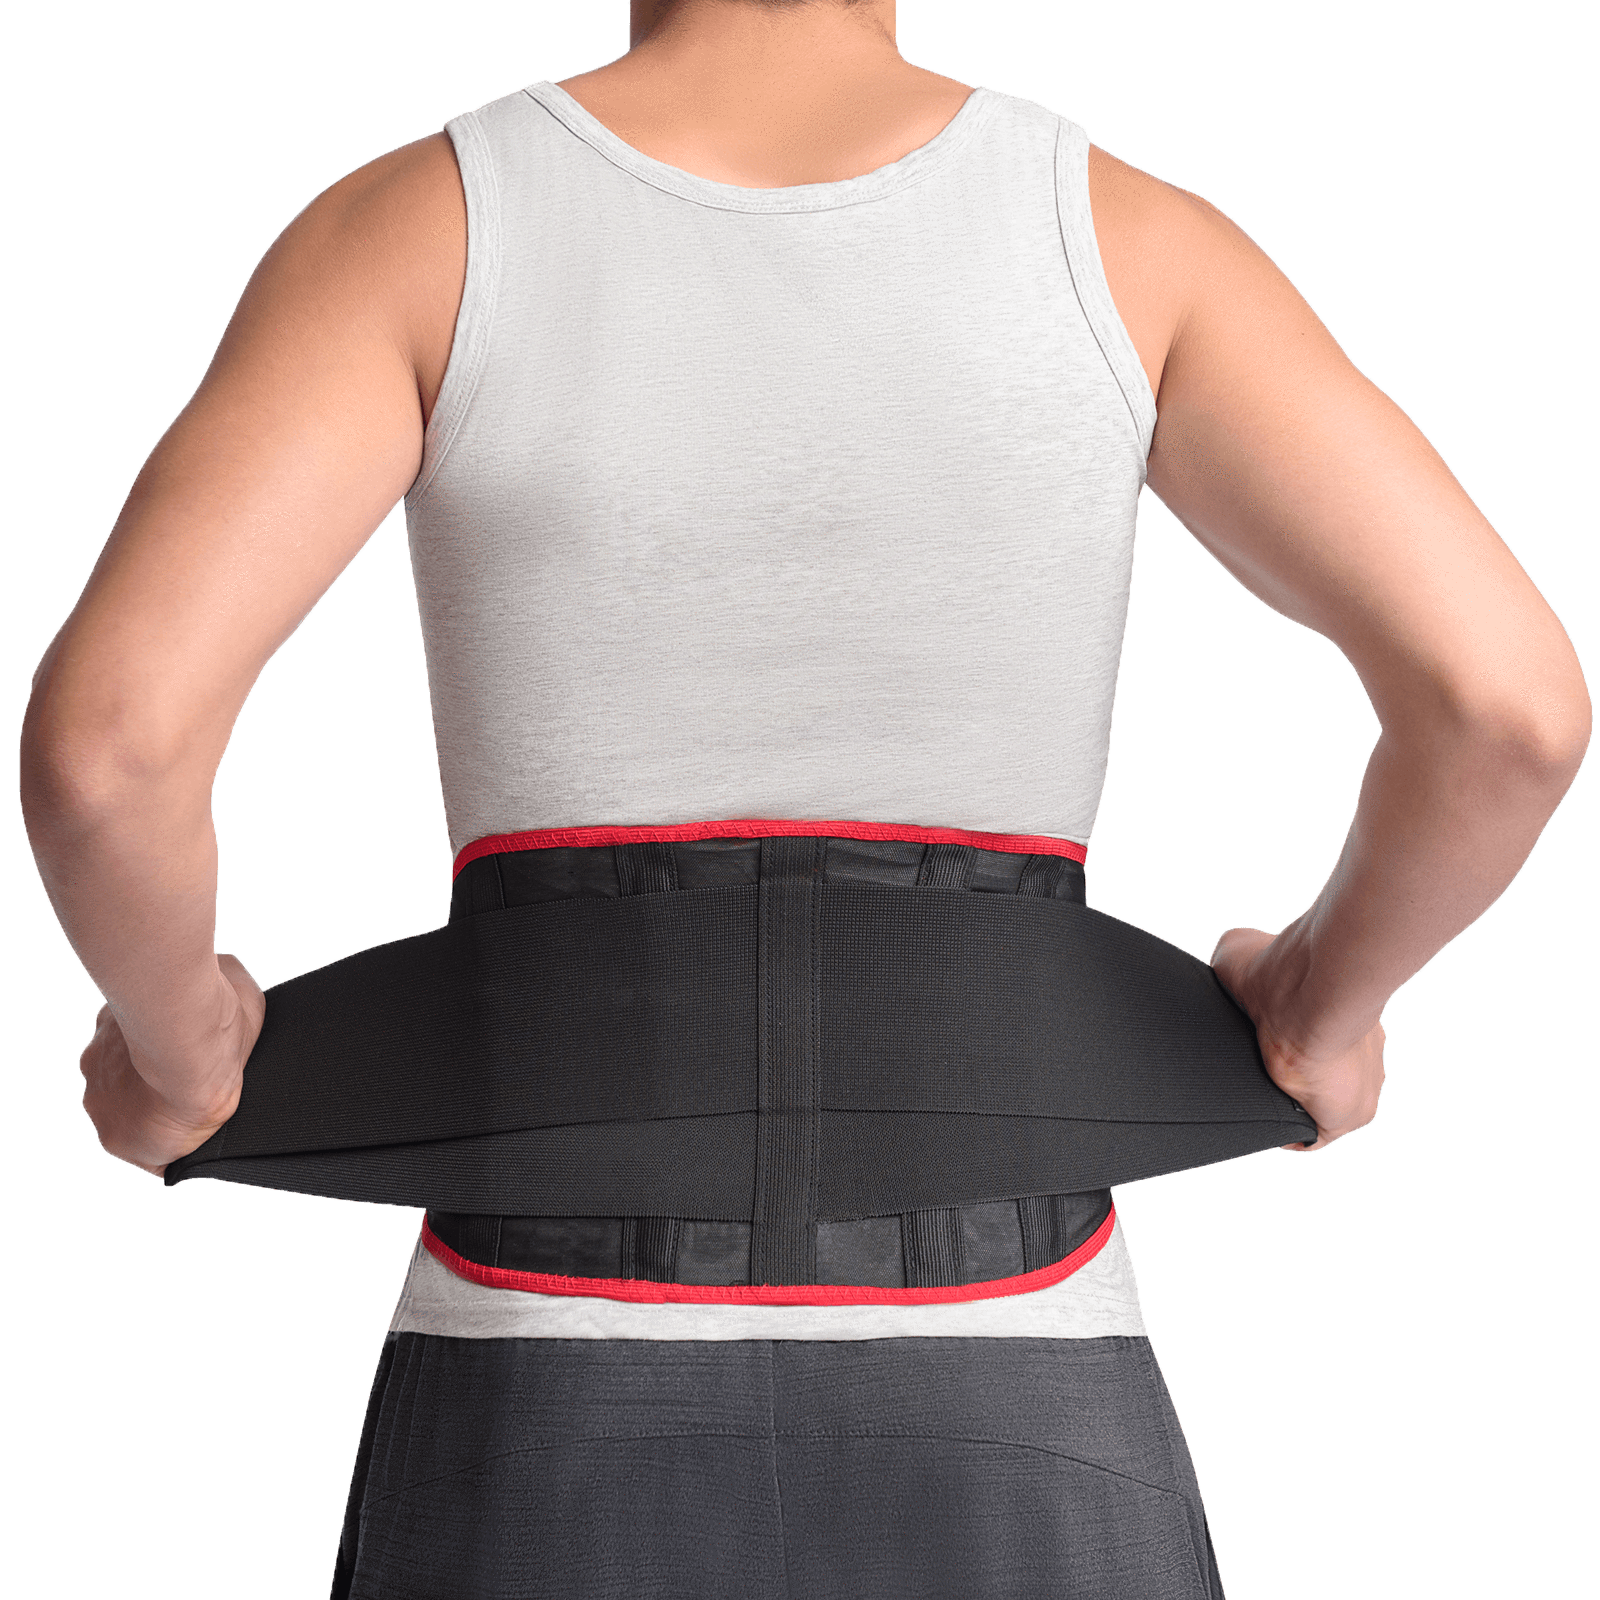 Lower Back Support Belt Brace